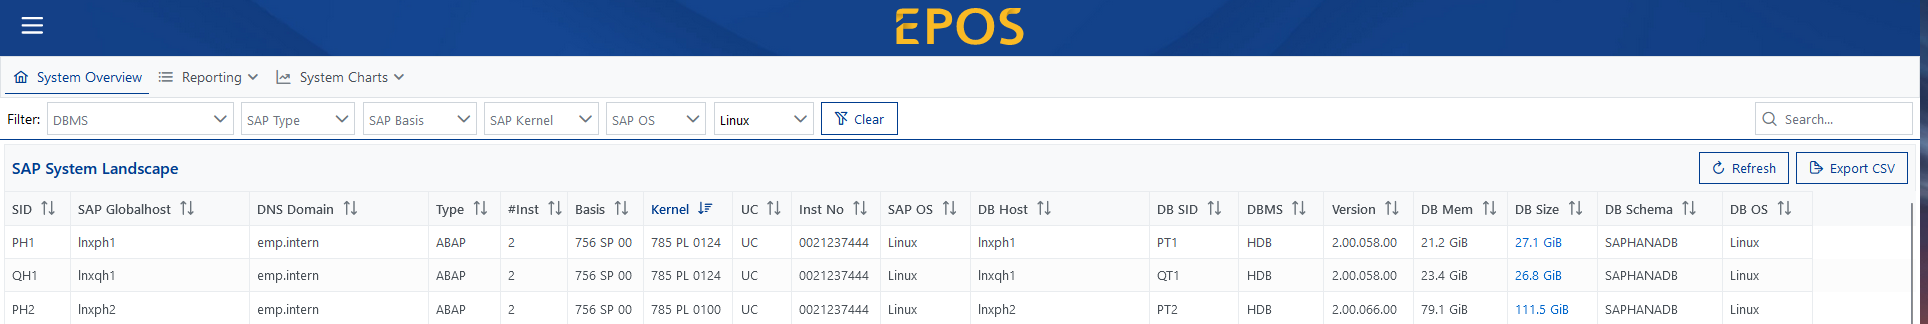 Screenshot aus Reporting Engine der SAP-Infrastruktur Automations-Software EPOS